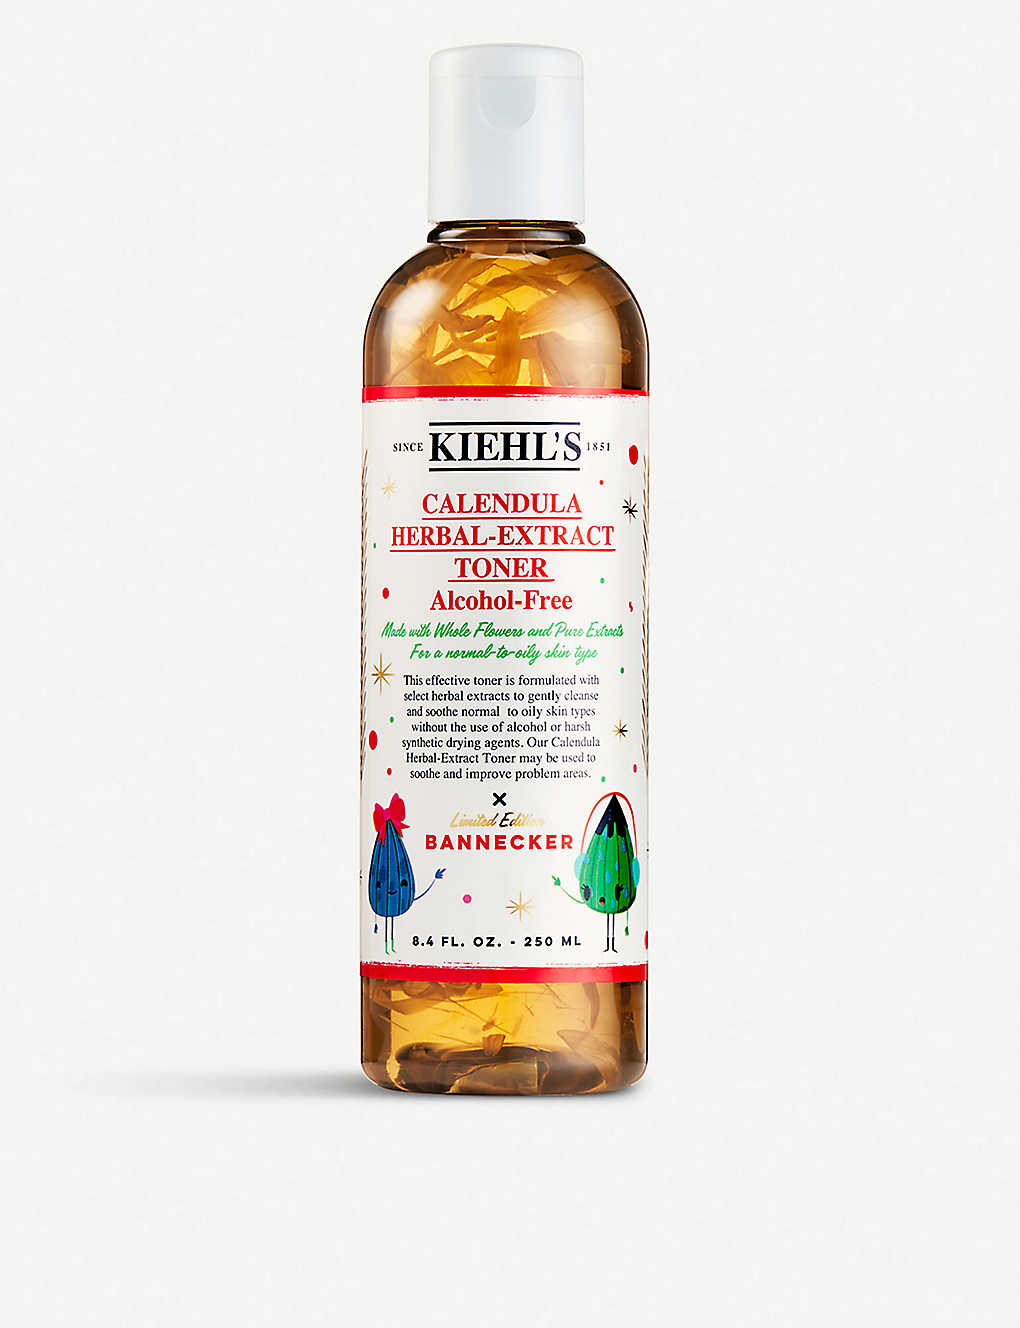 Kiehl's Limited Edition Calendula Herbal-Extract Toner